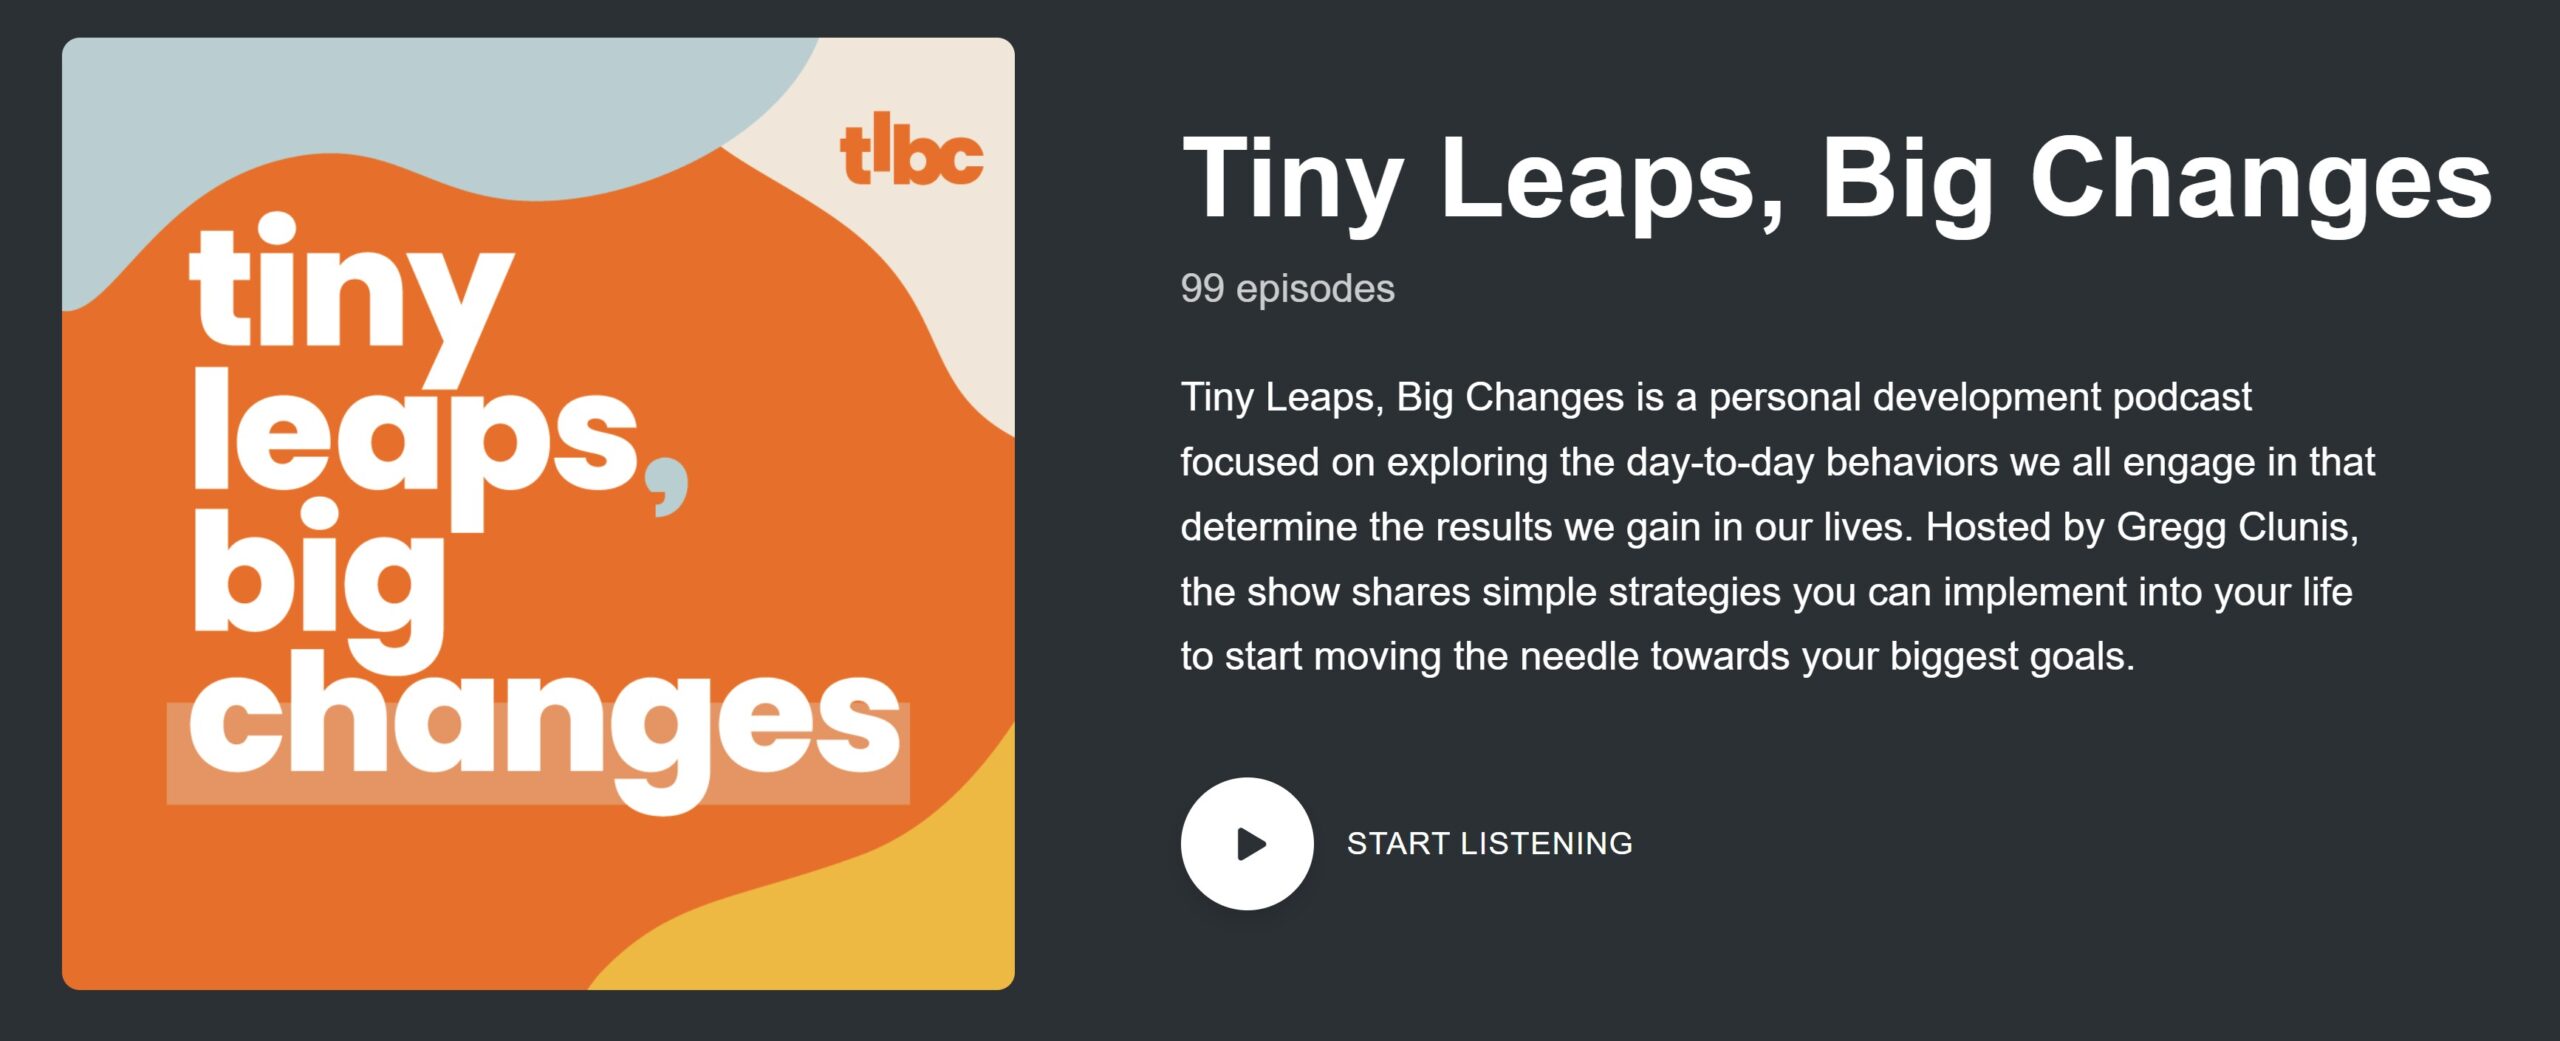 tiny leaps big changes